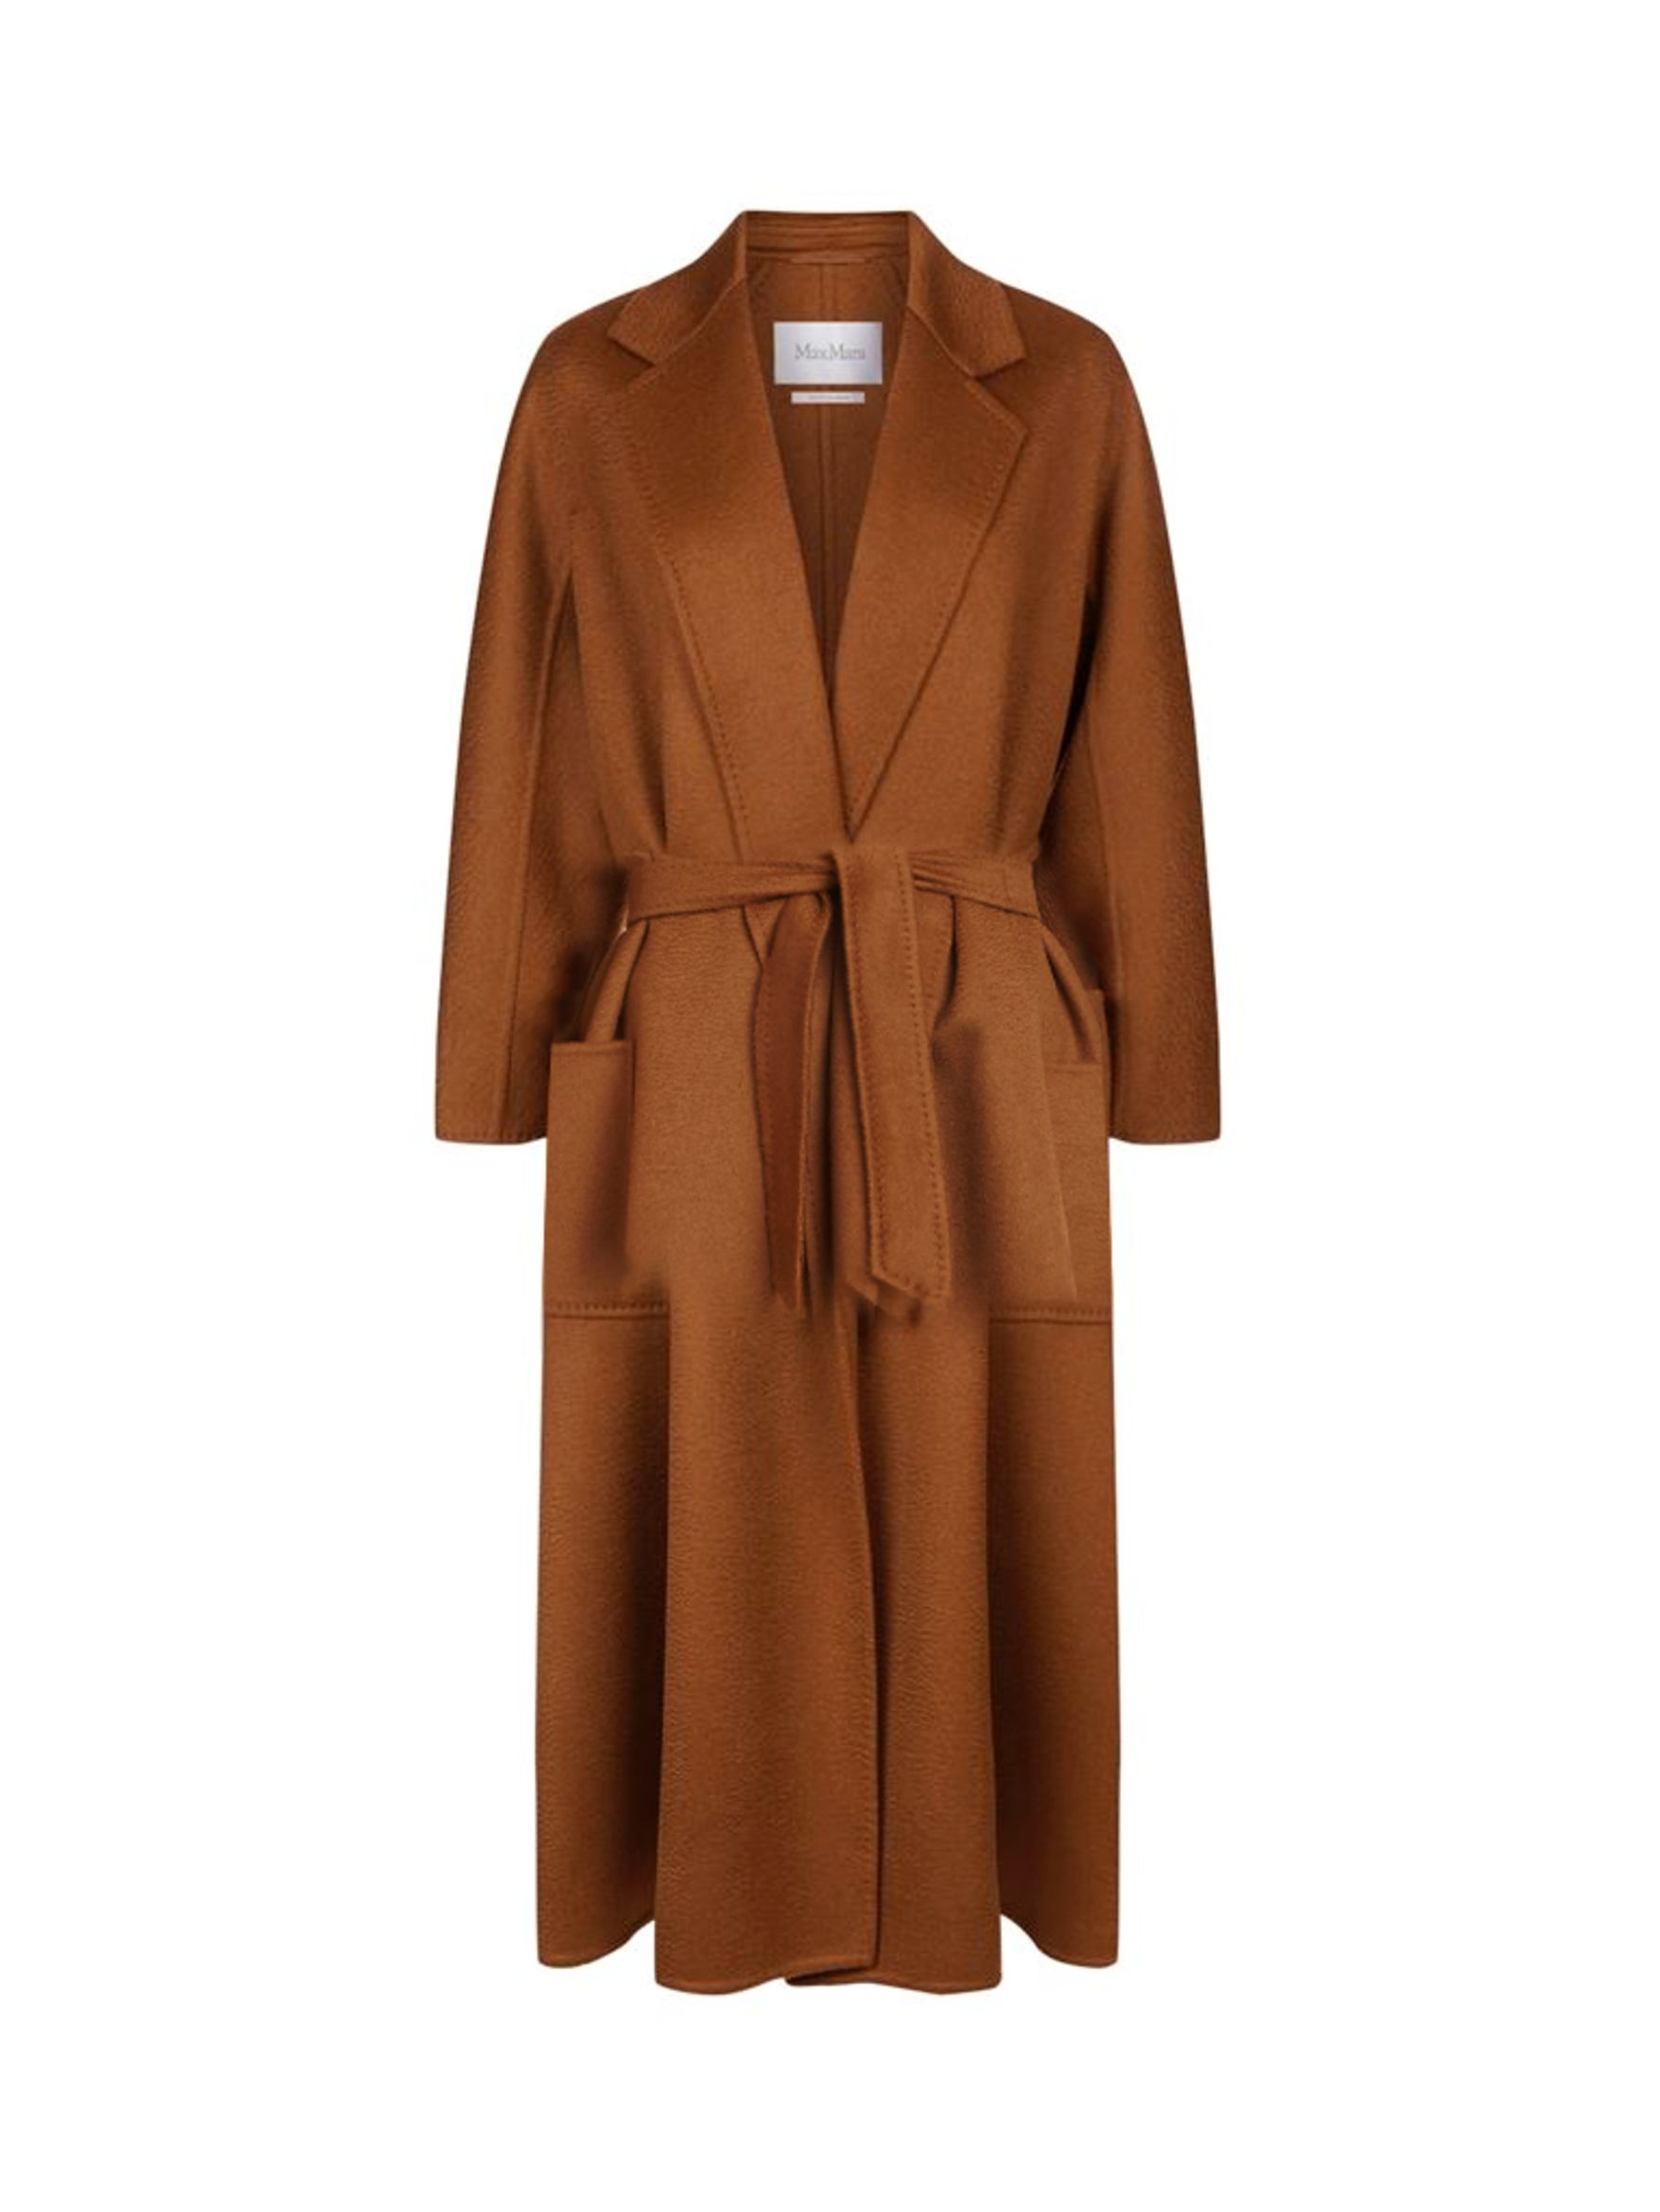 Max mara Labbro Cashmere Coat in Brown | Lyst